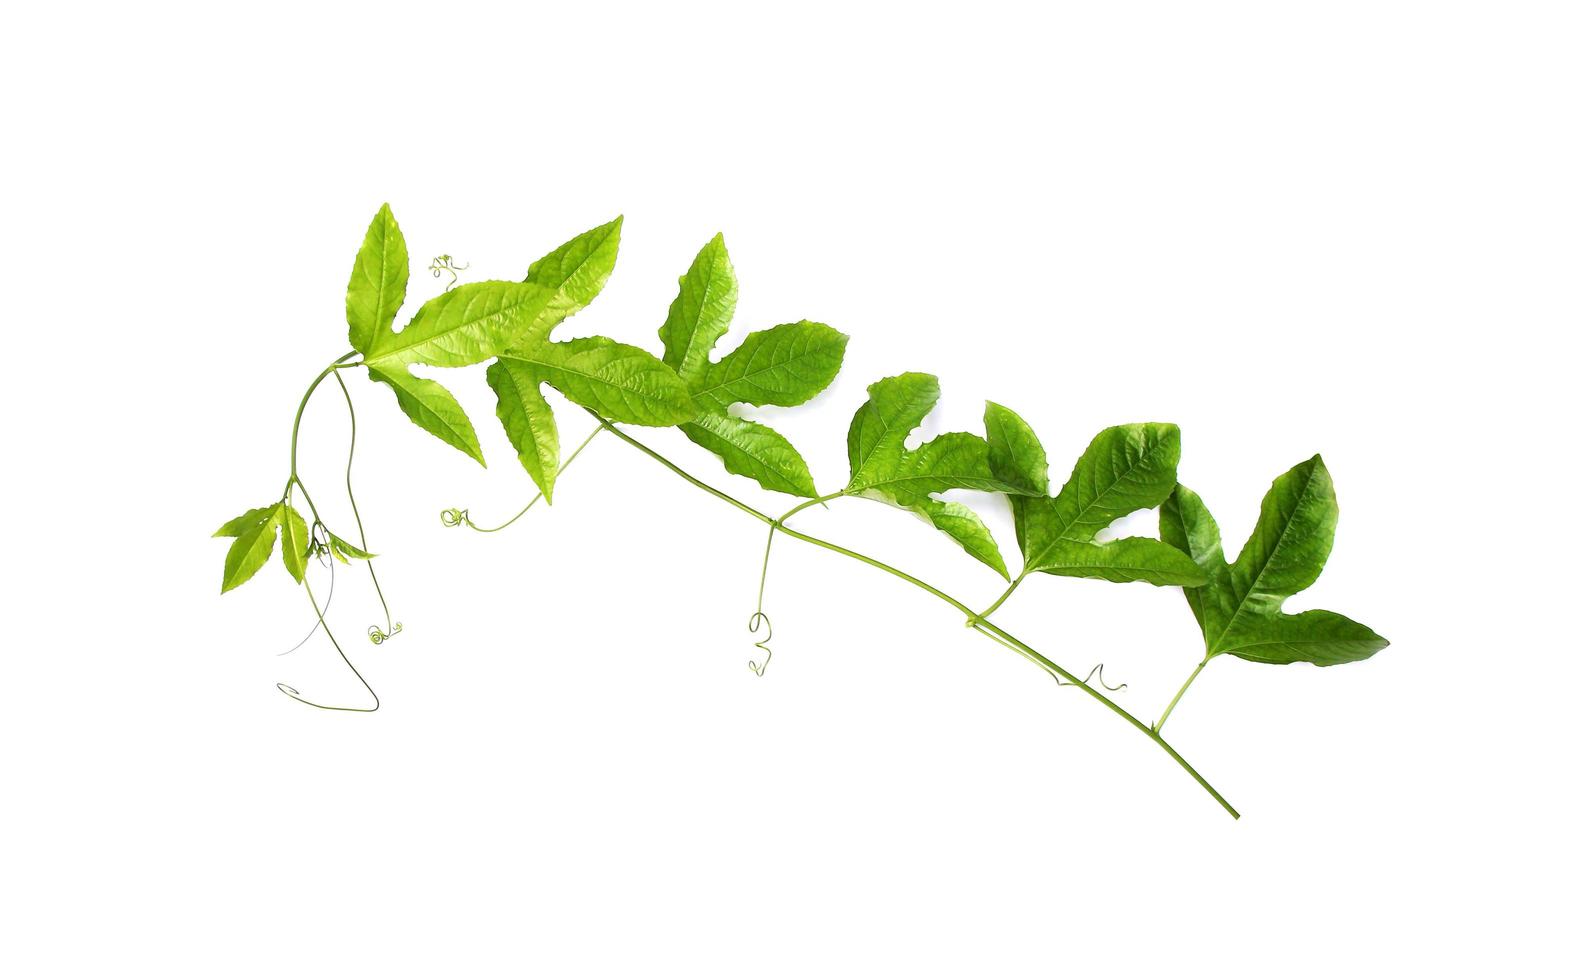 groene blad gedraaide klimplant geïsoleerd op witte achtergrond foto